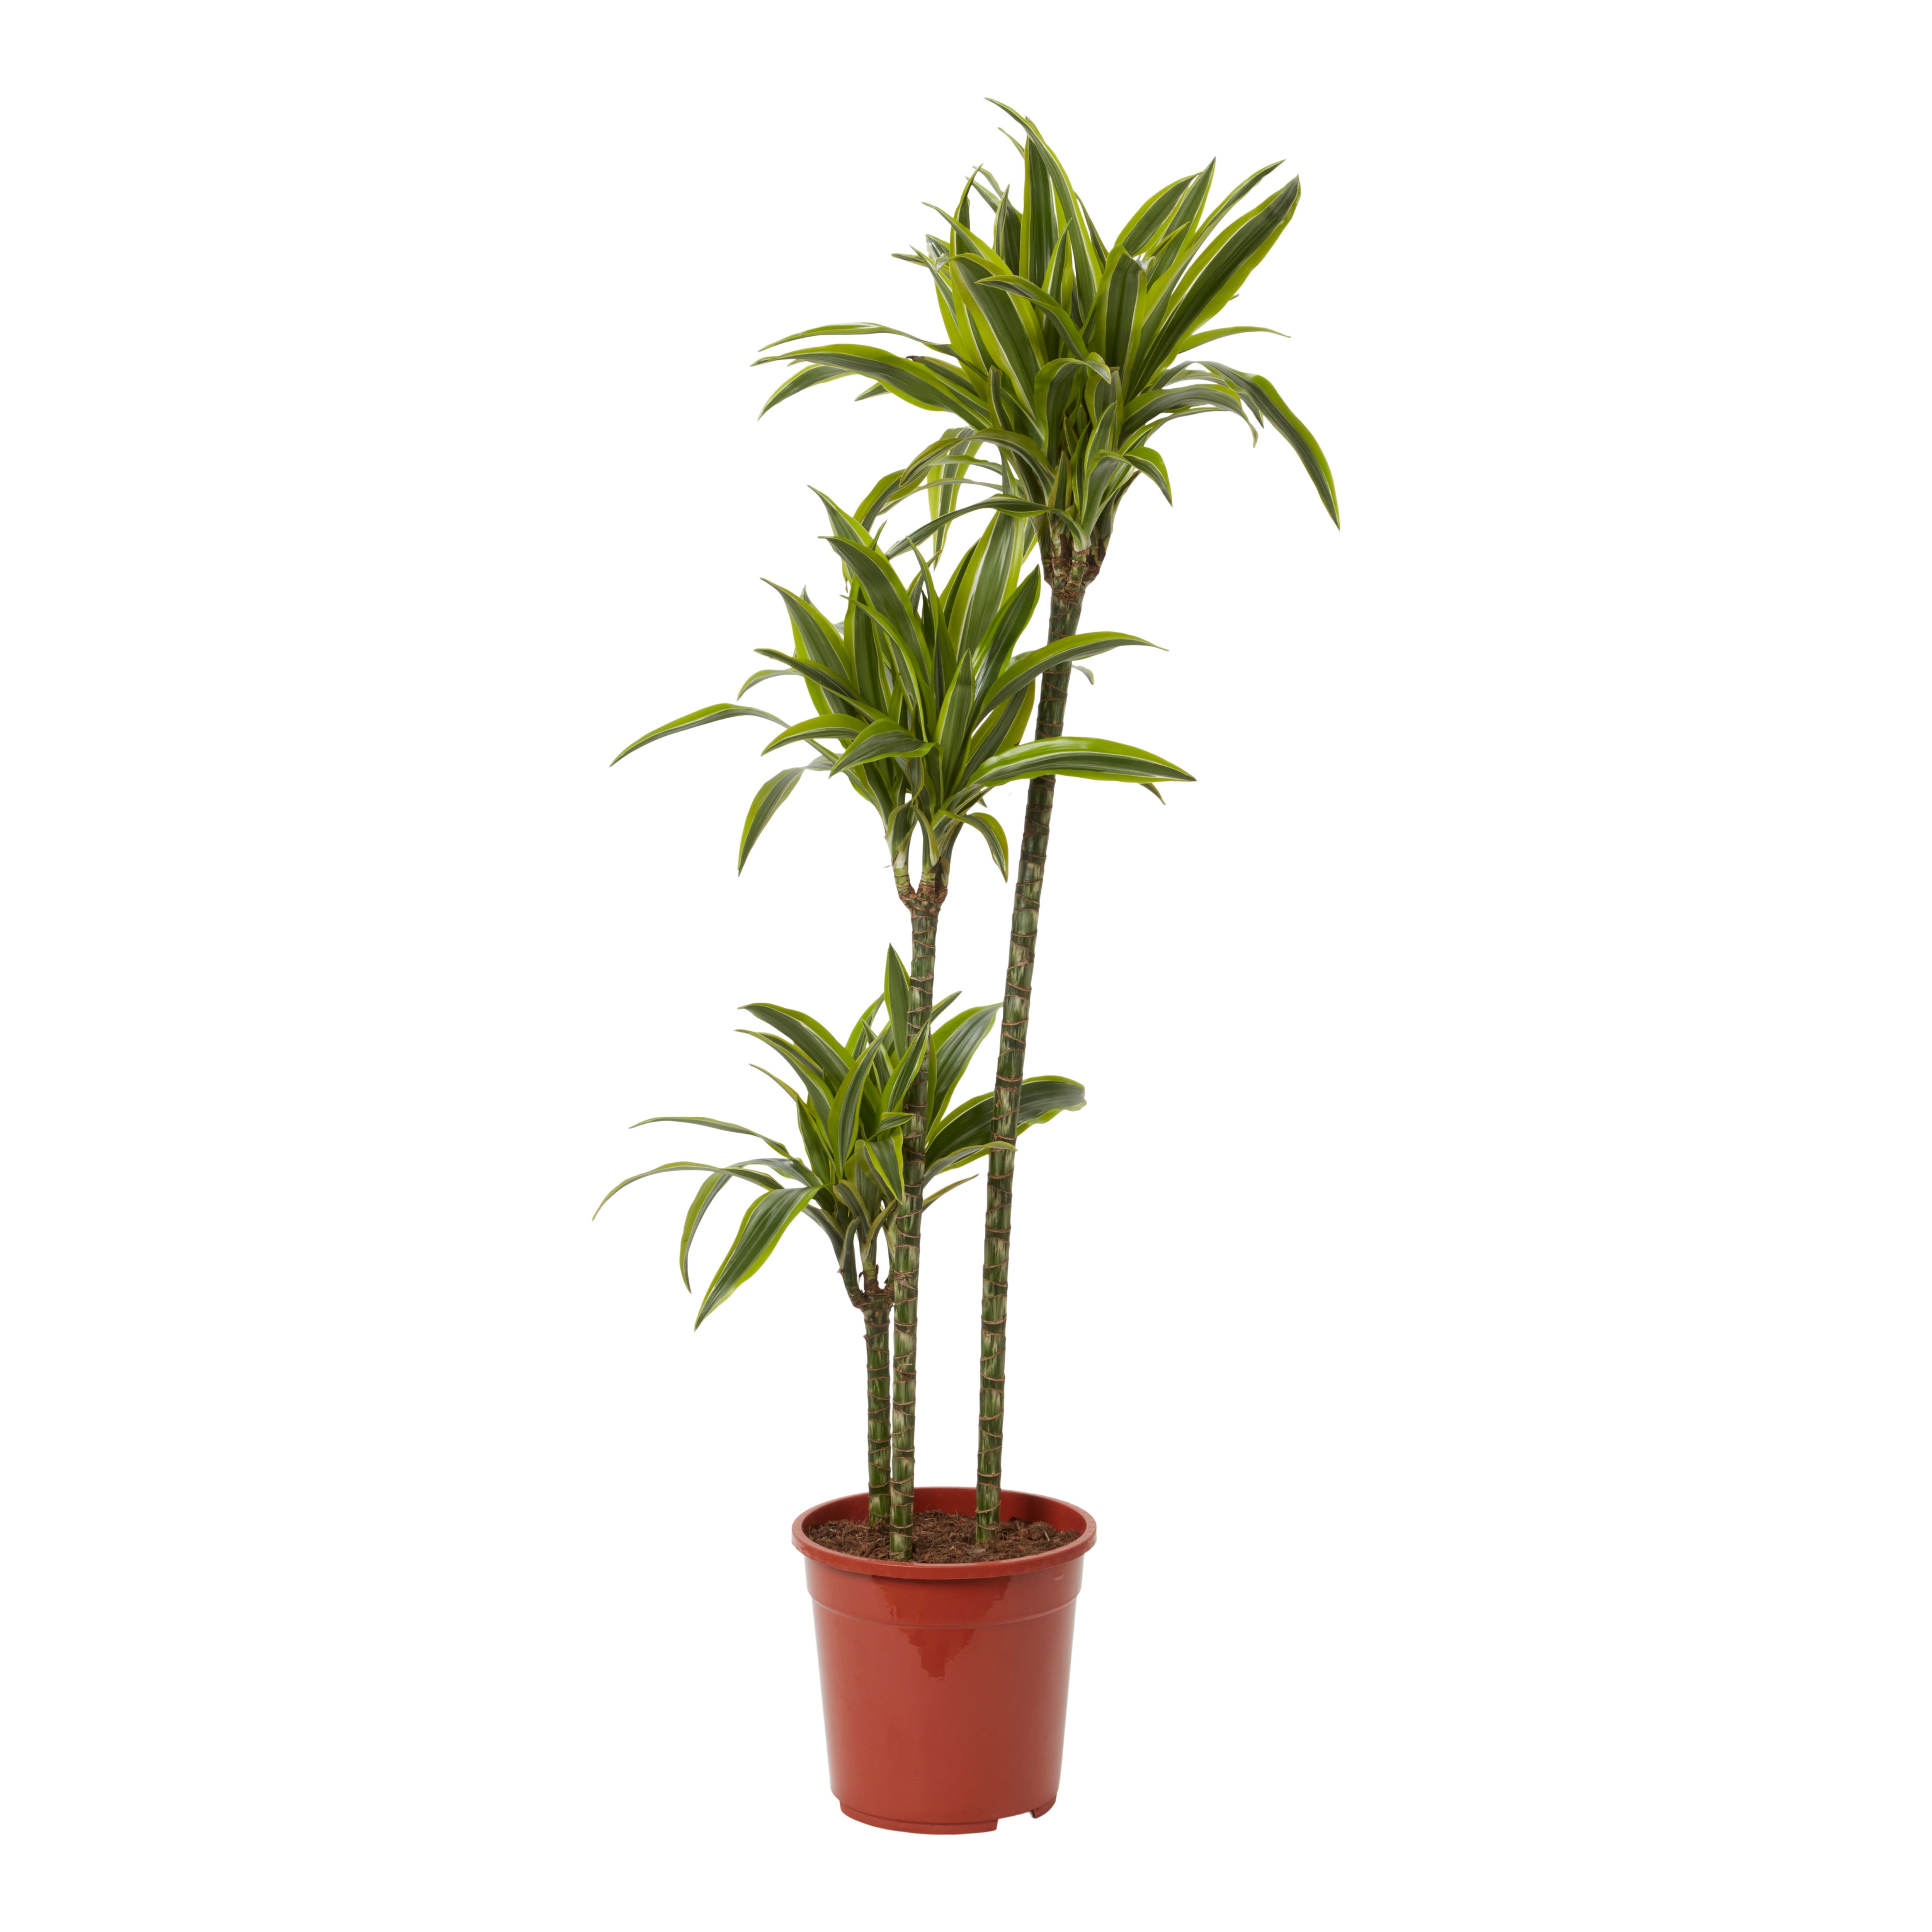 Dracaena Tree in 24cm Terracotta Plastic Grow pot